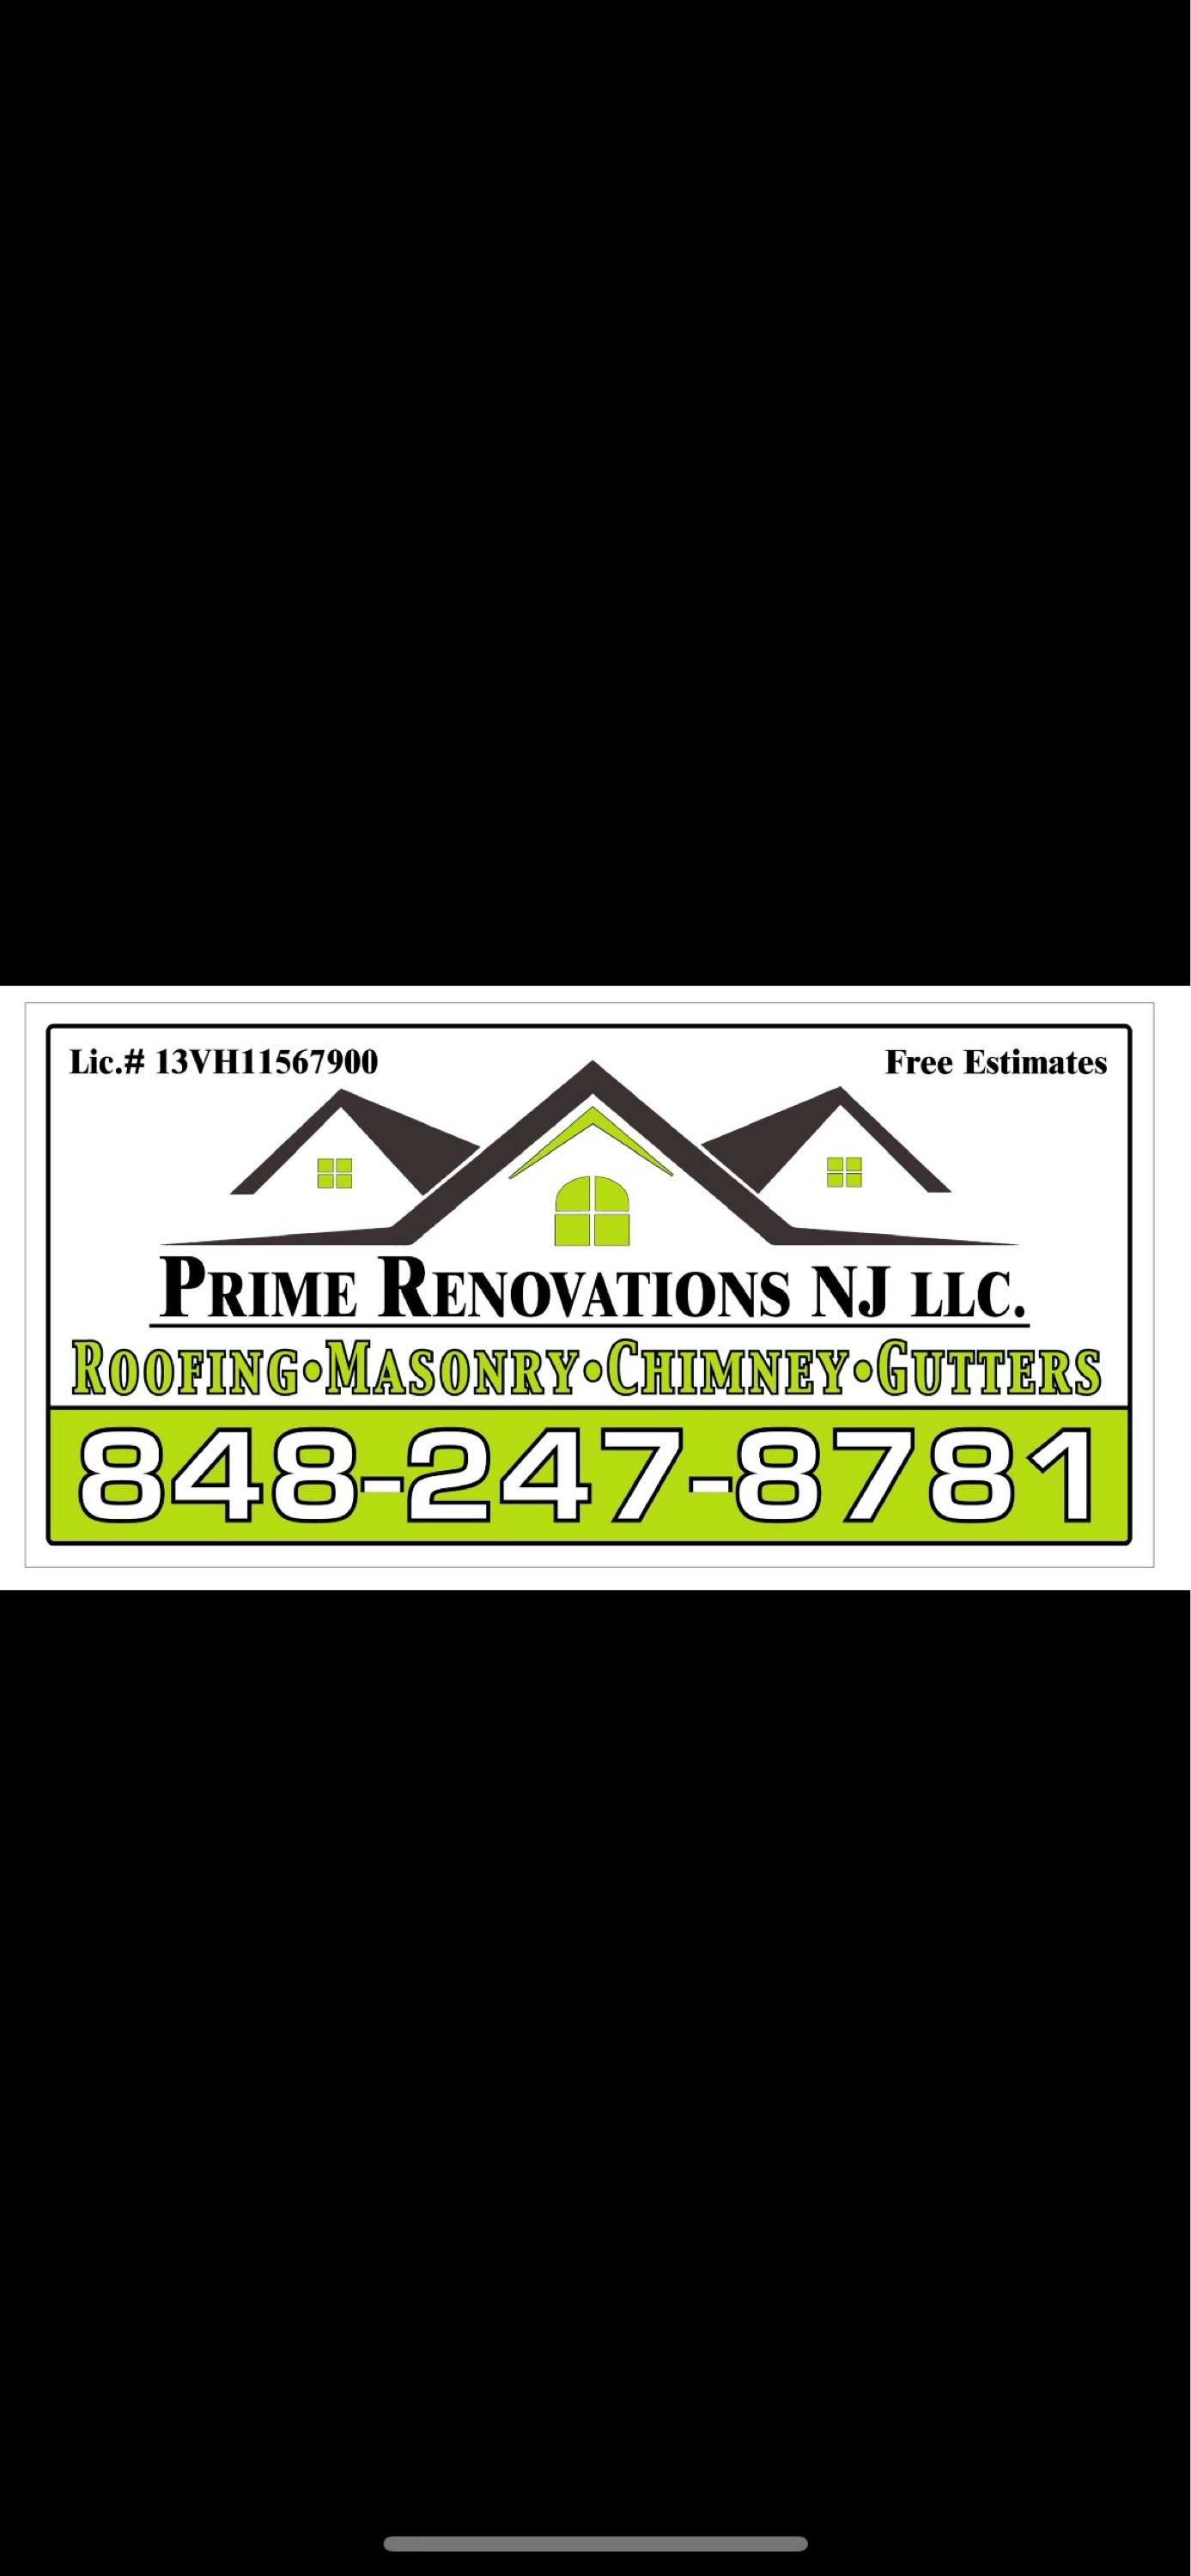 Prime Renovations NJ, LLC Logo